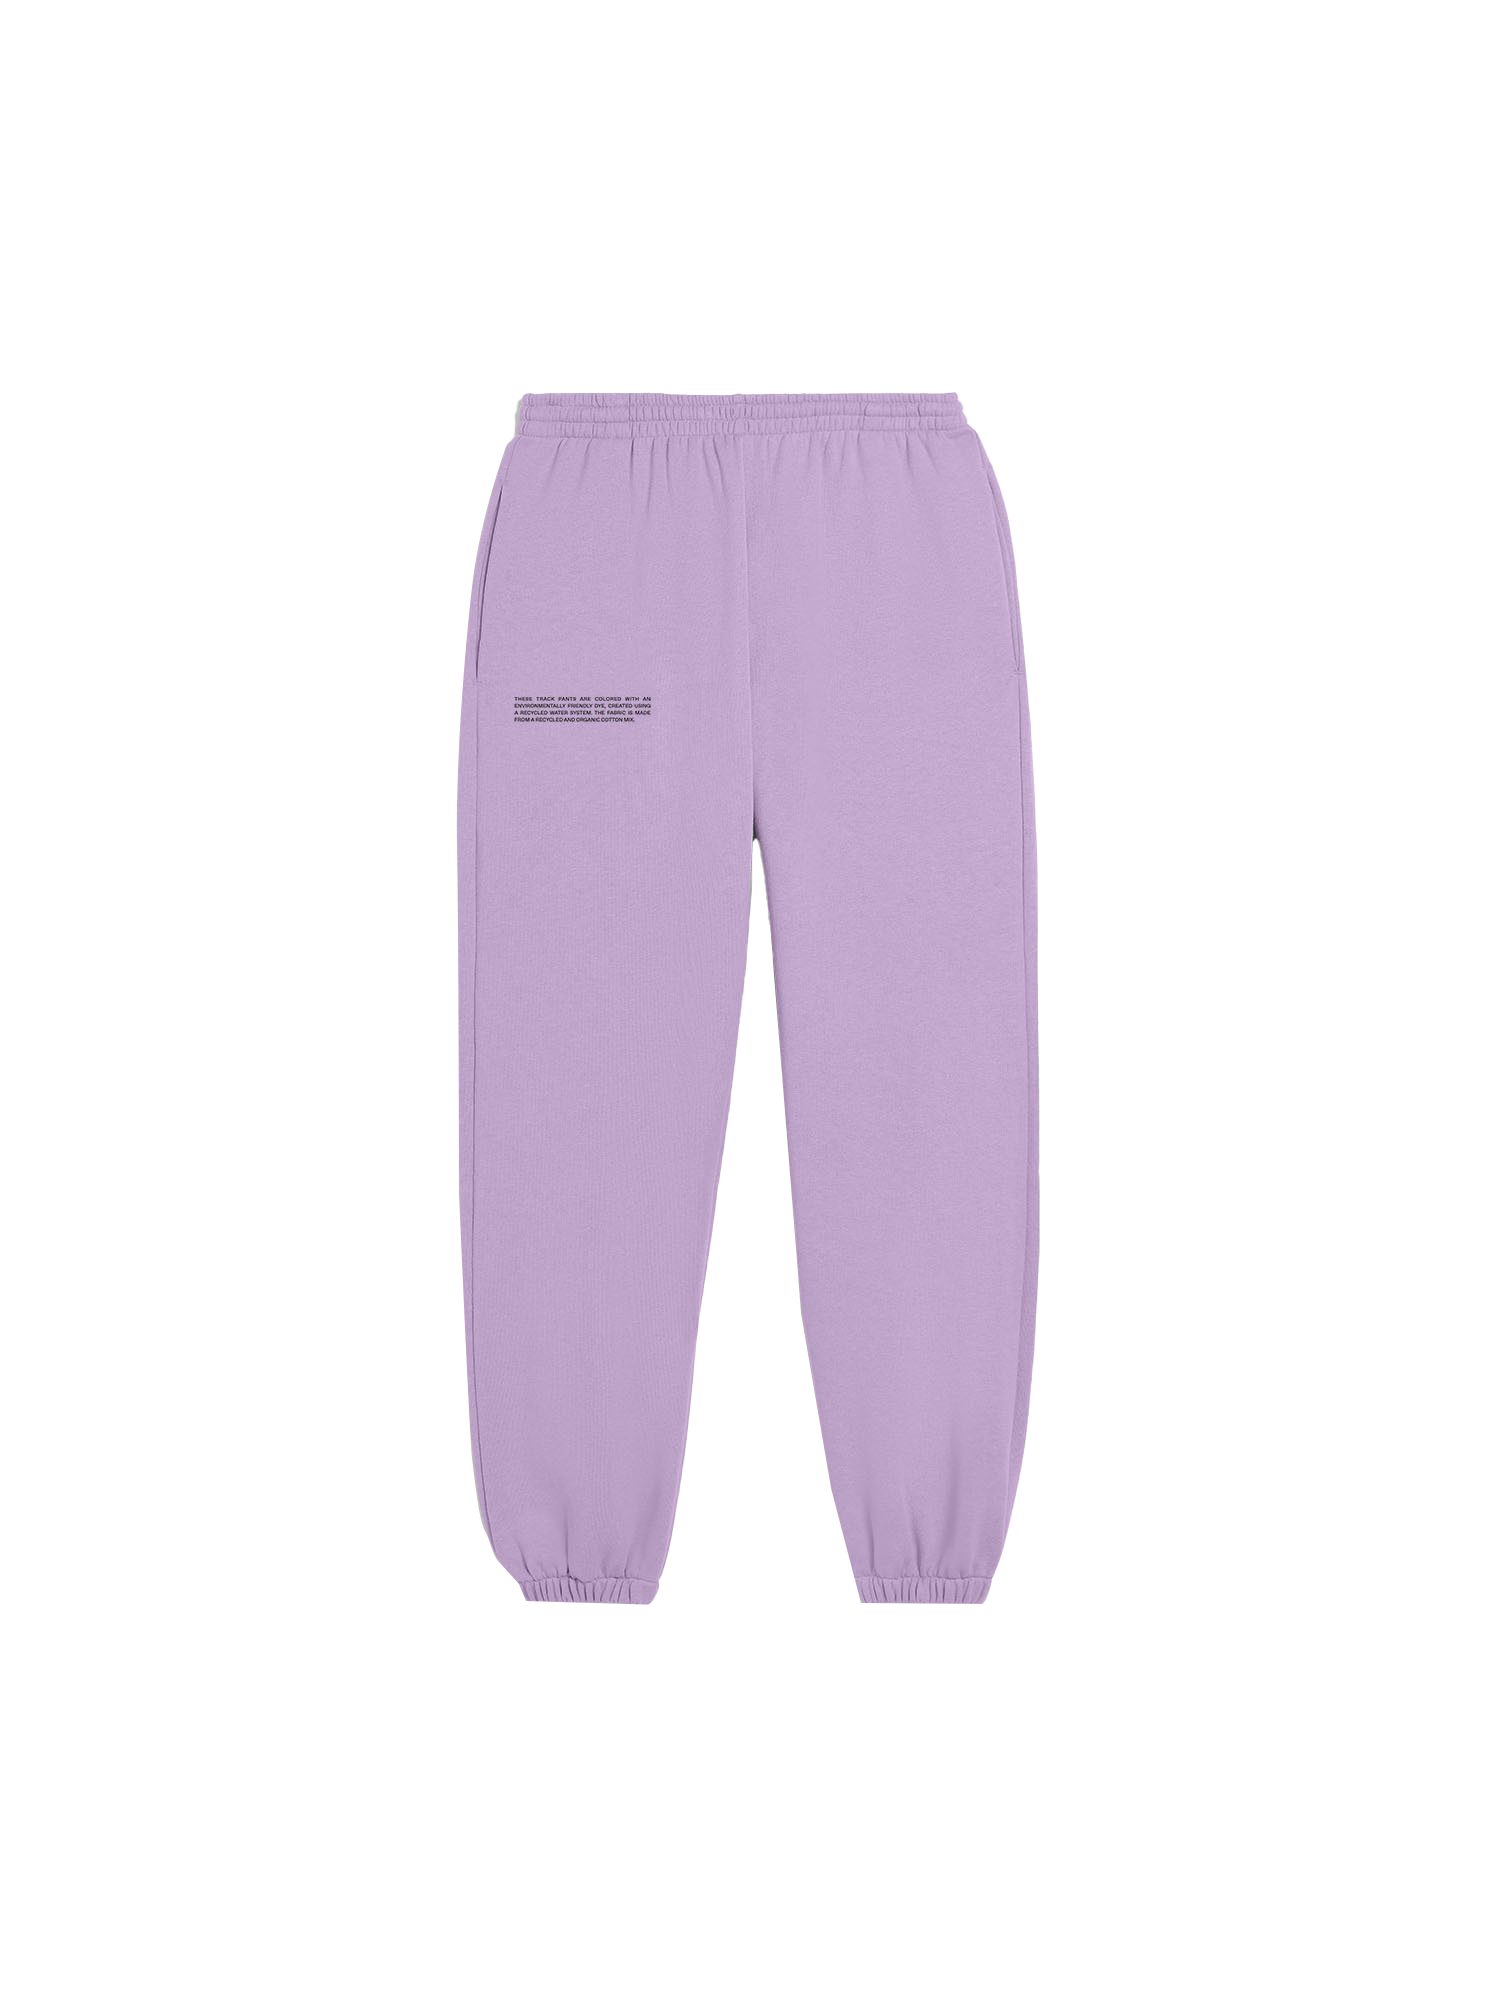 Signature Track Pants AW22—orchid purple packshot-3